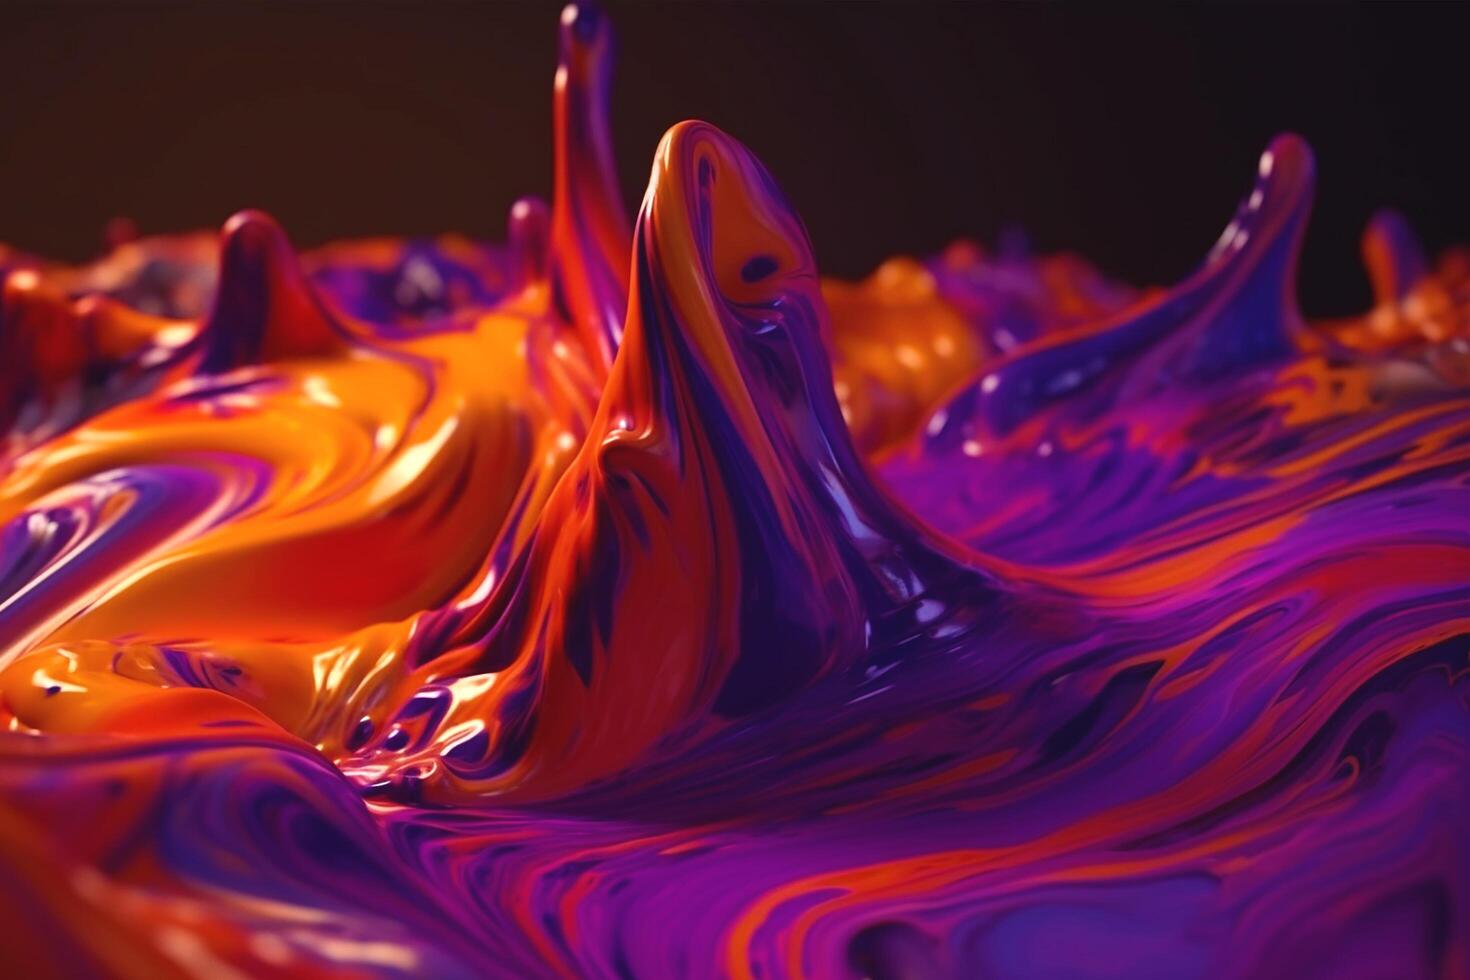 abstract liquid painting digital art background. photo